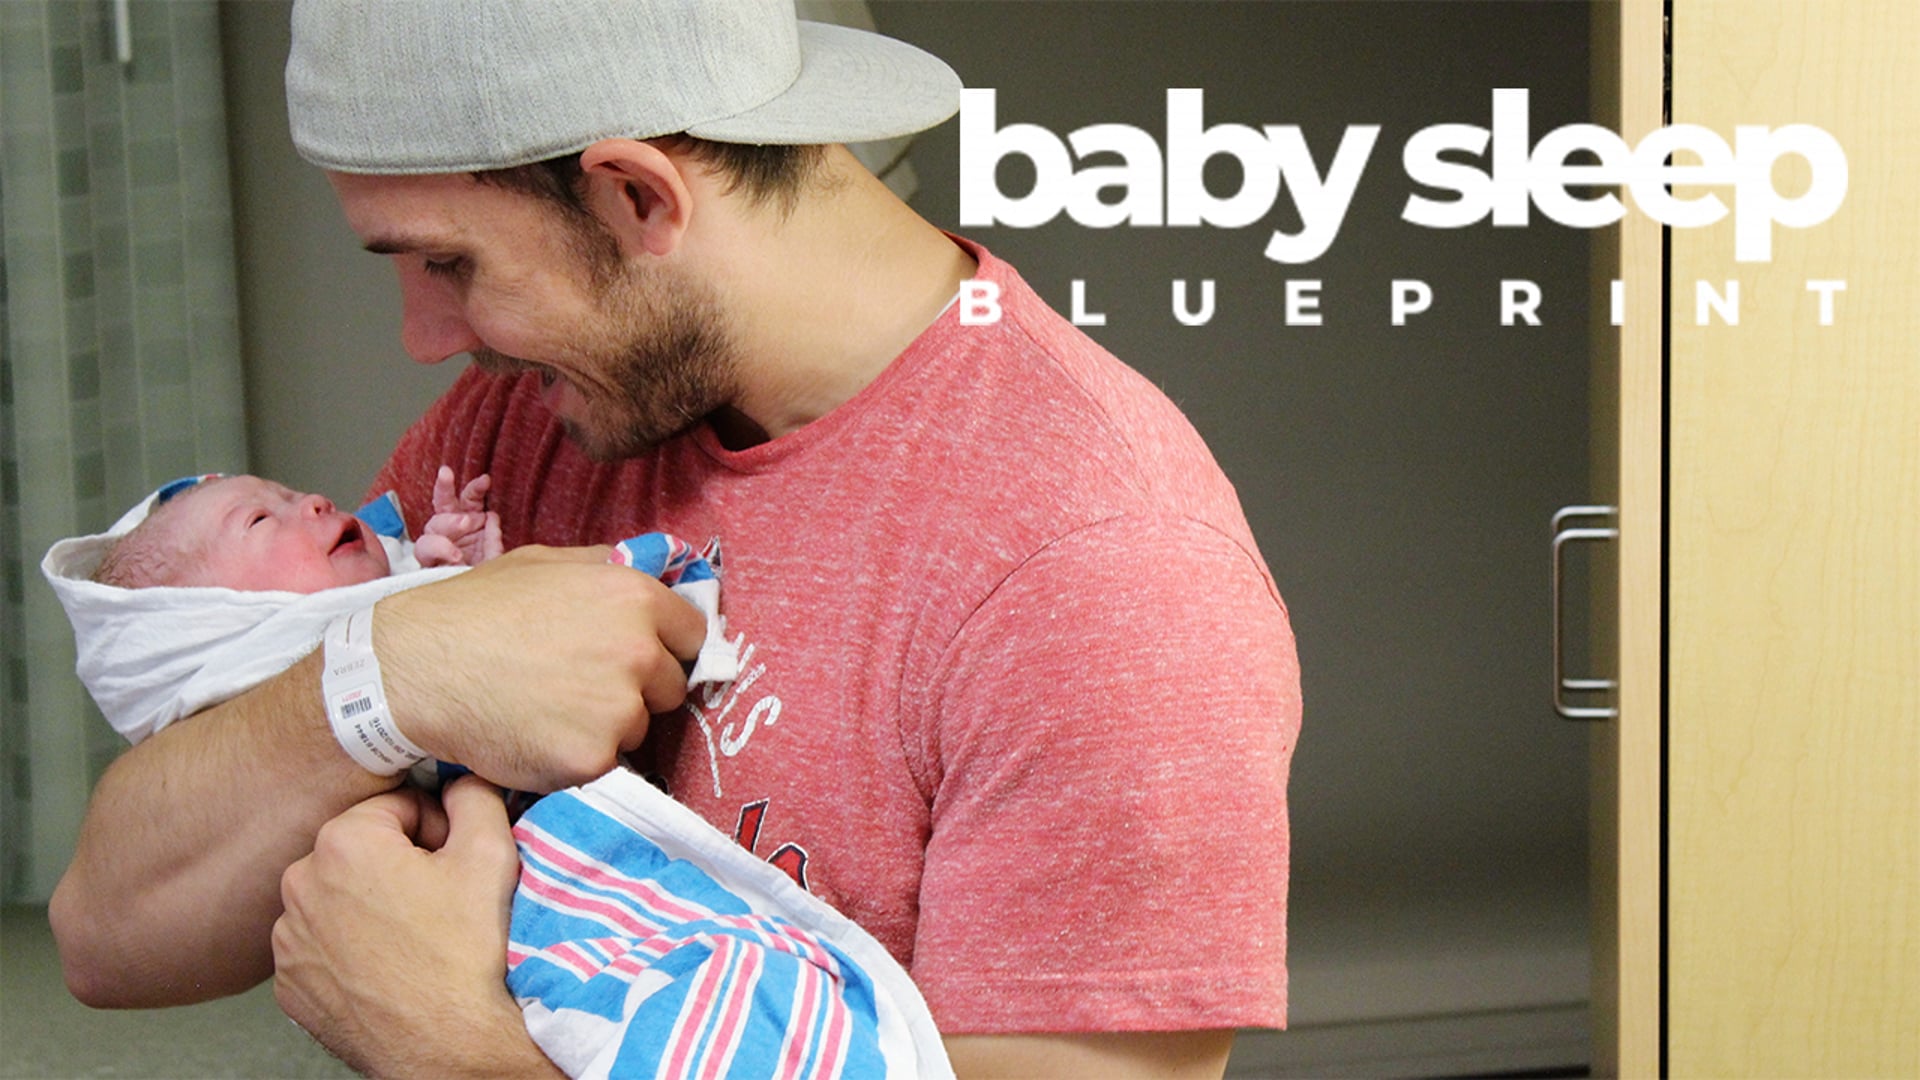 Baby Sleep Blueprint Ad - $2,000 Project